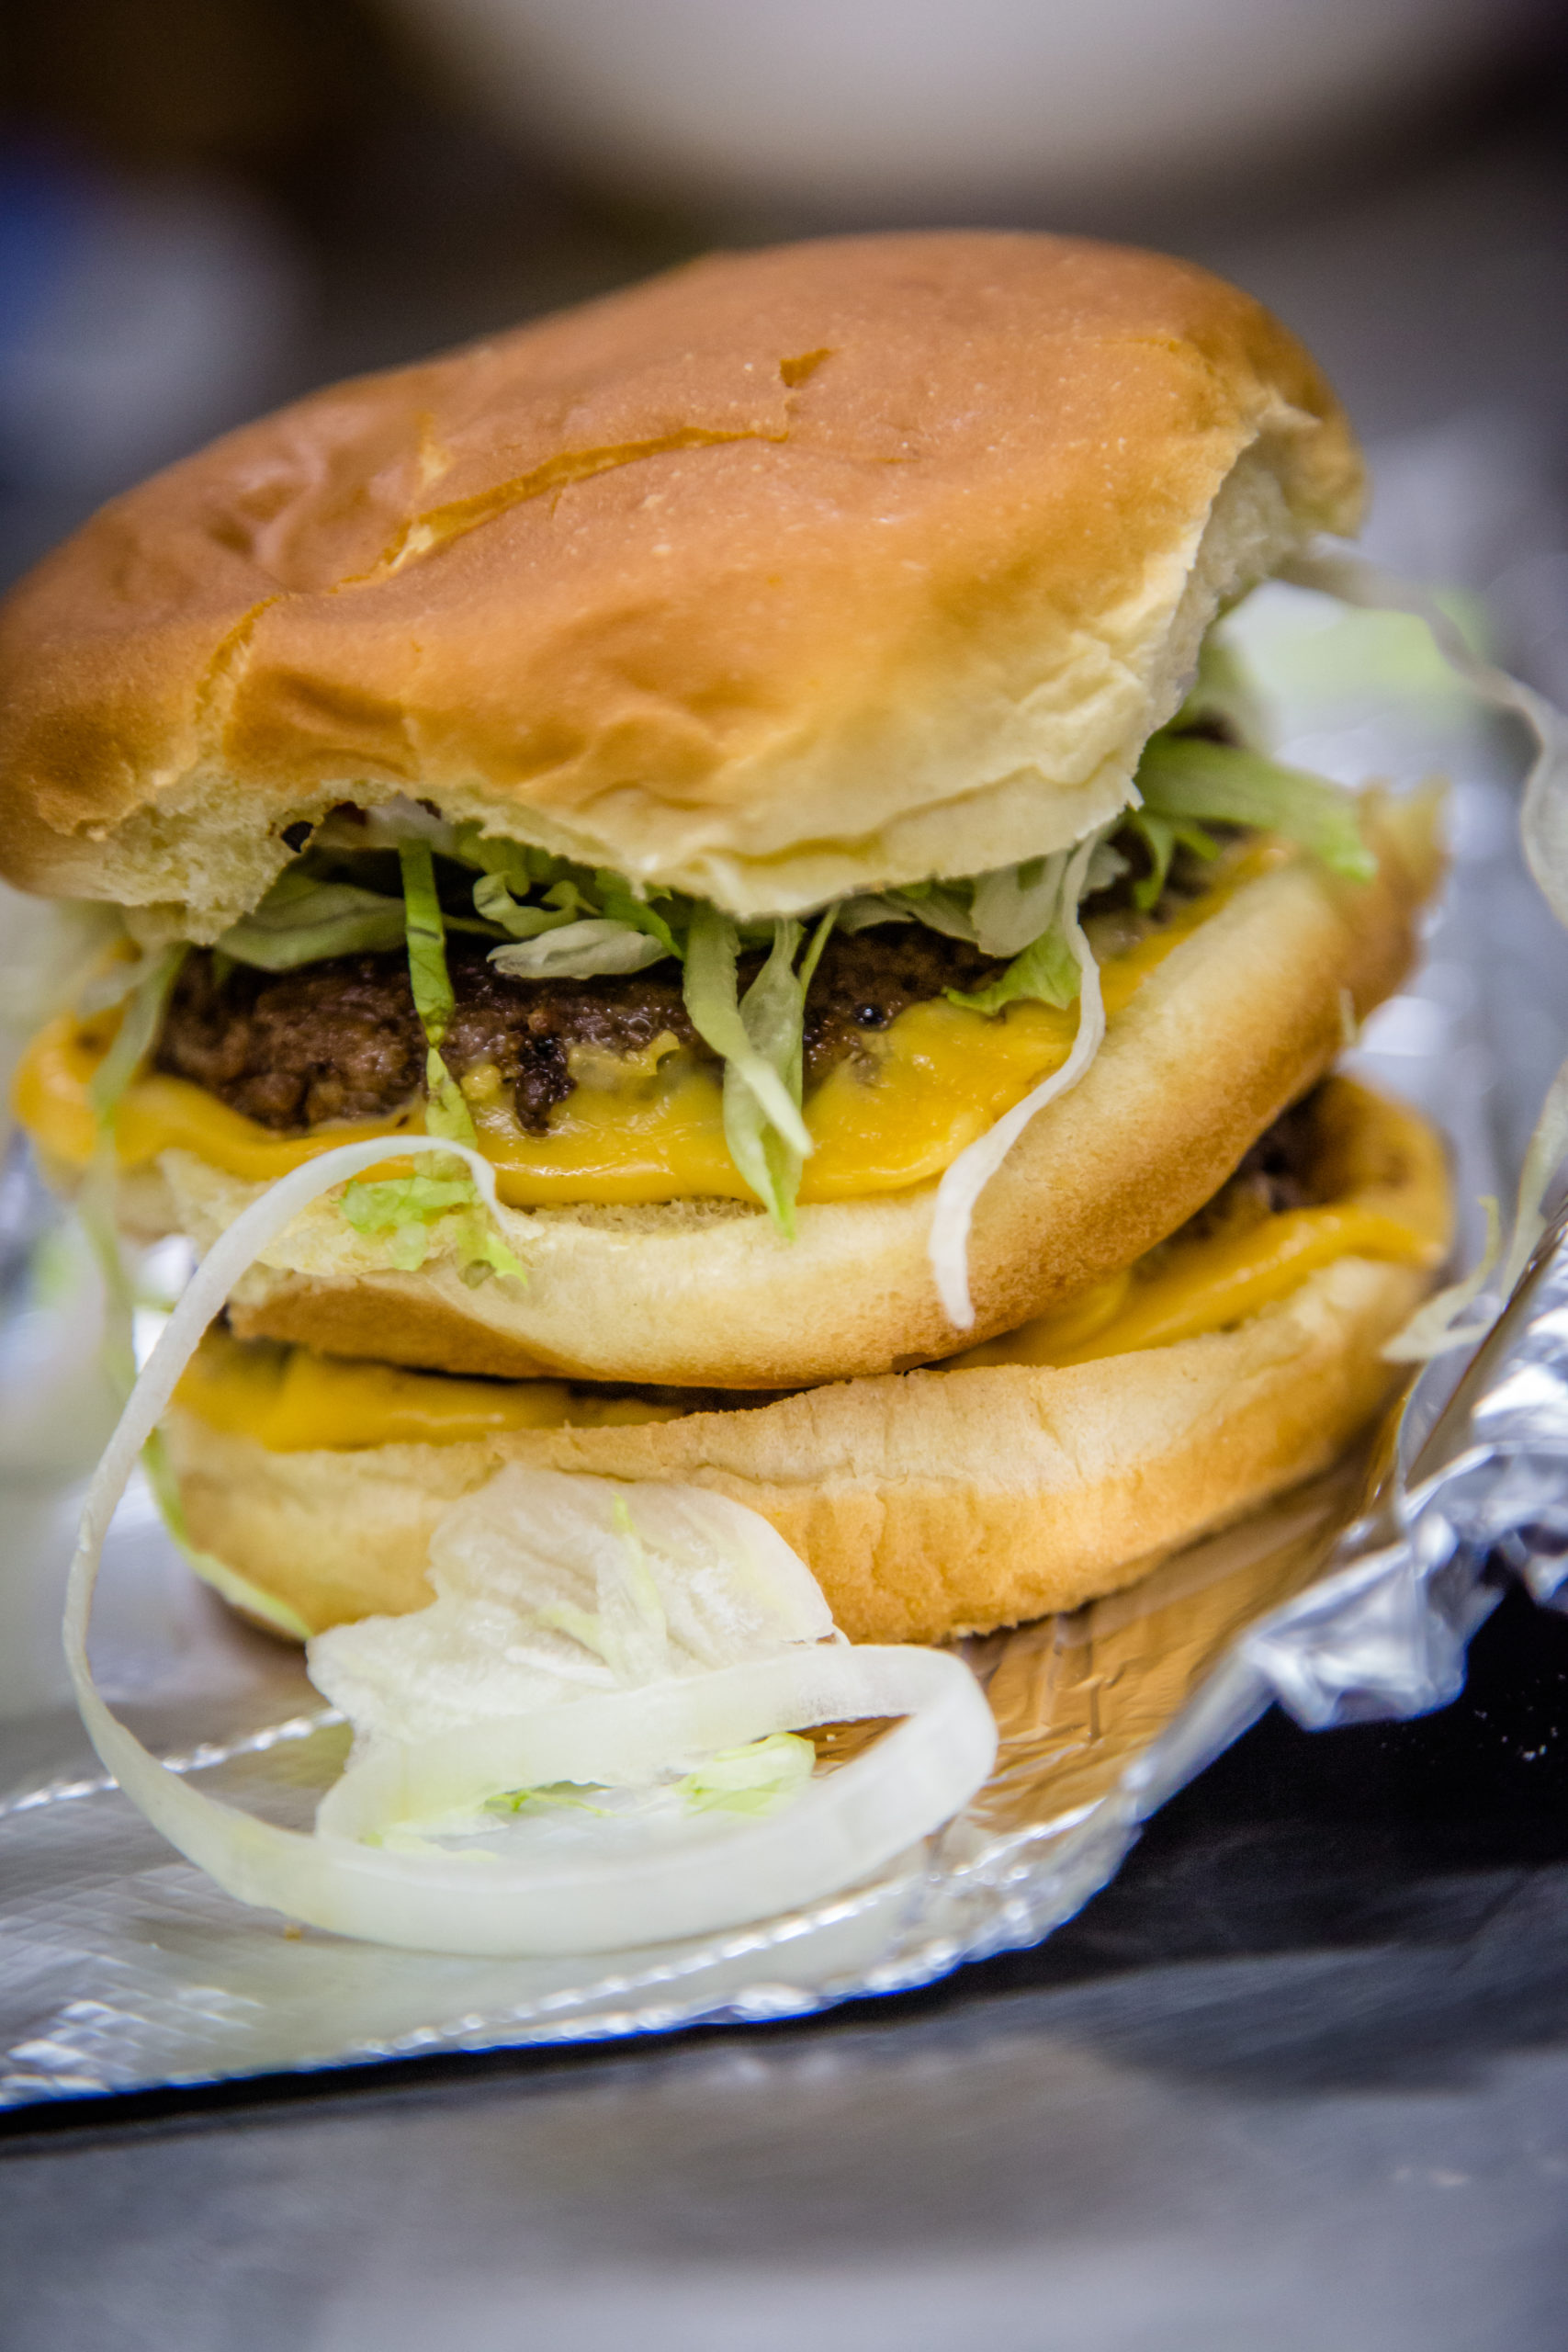 Locals take on Cheeseburger Challenge